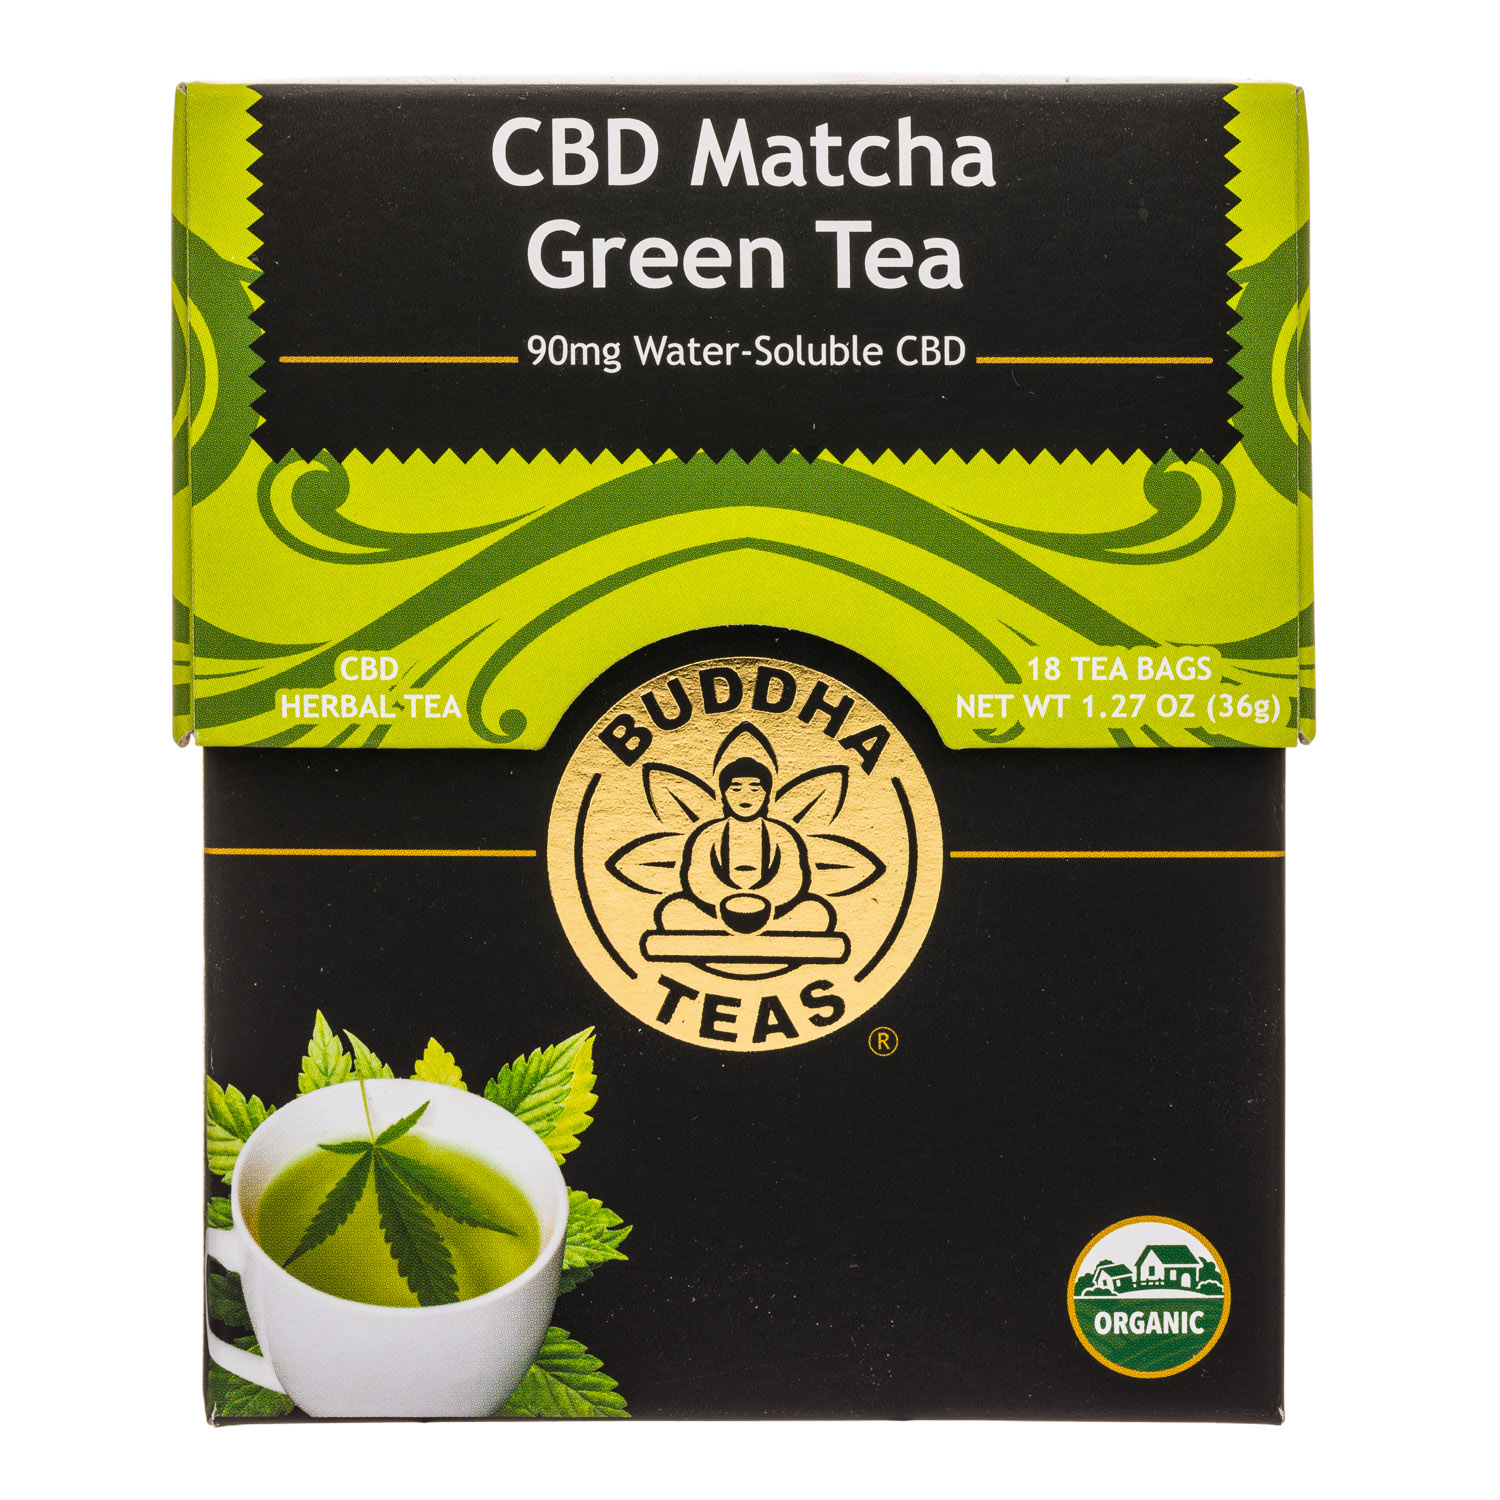 CBD Matcha Green Tea